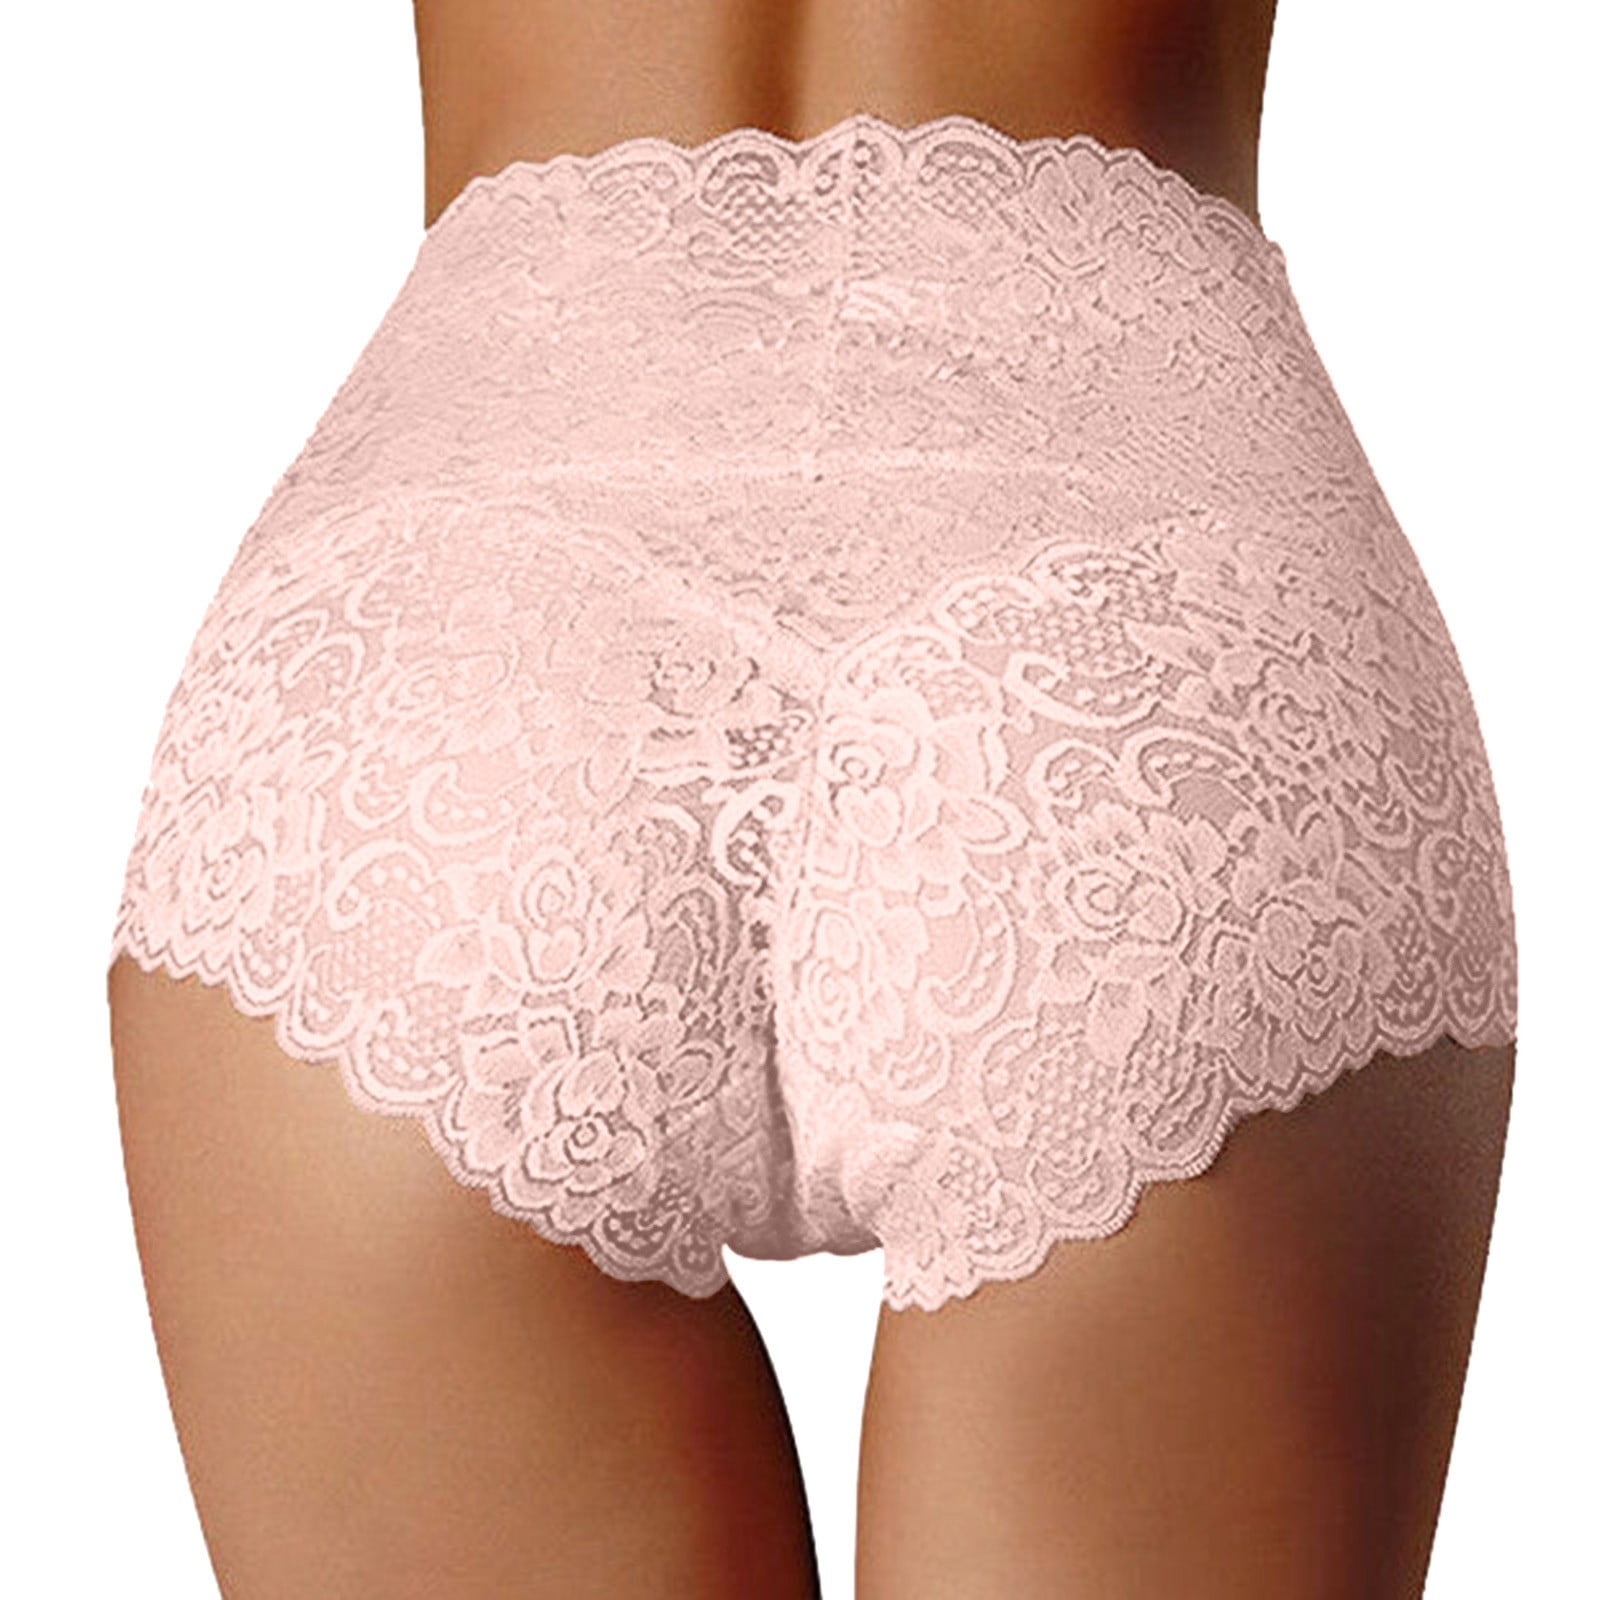 CBGELRT Women's Panties Lace Soft Lingerie Mesh Cotton Underwear  Transparent Female Panty Hollow Thin Underwear Women